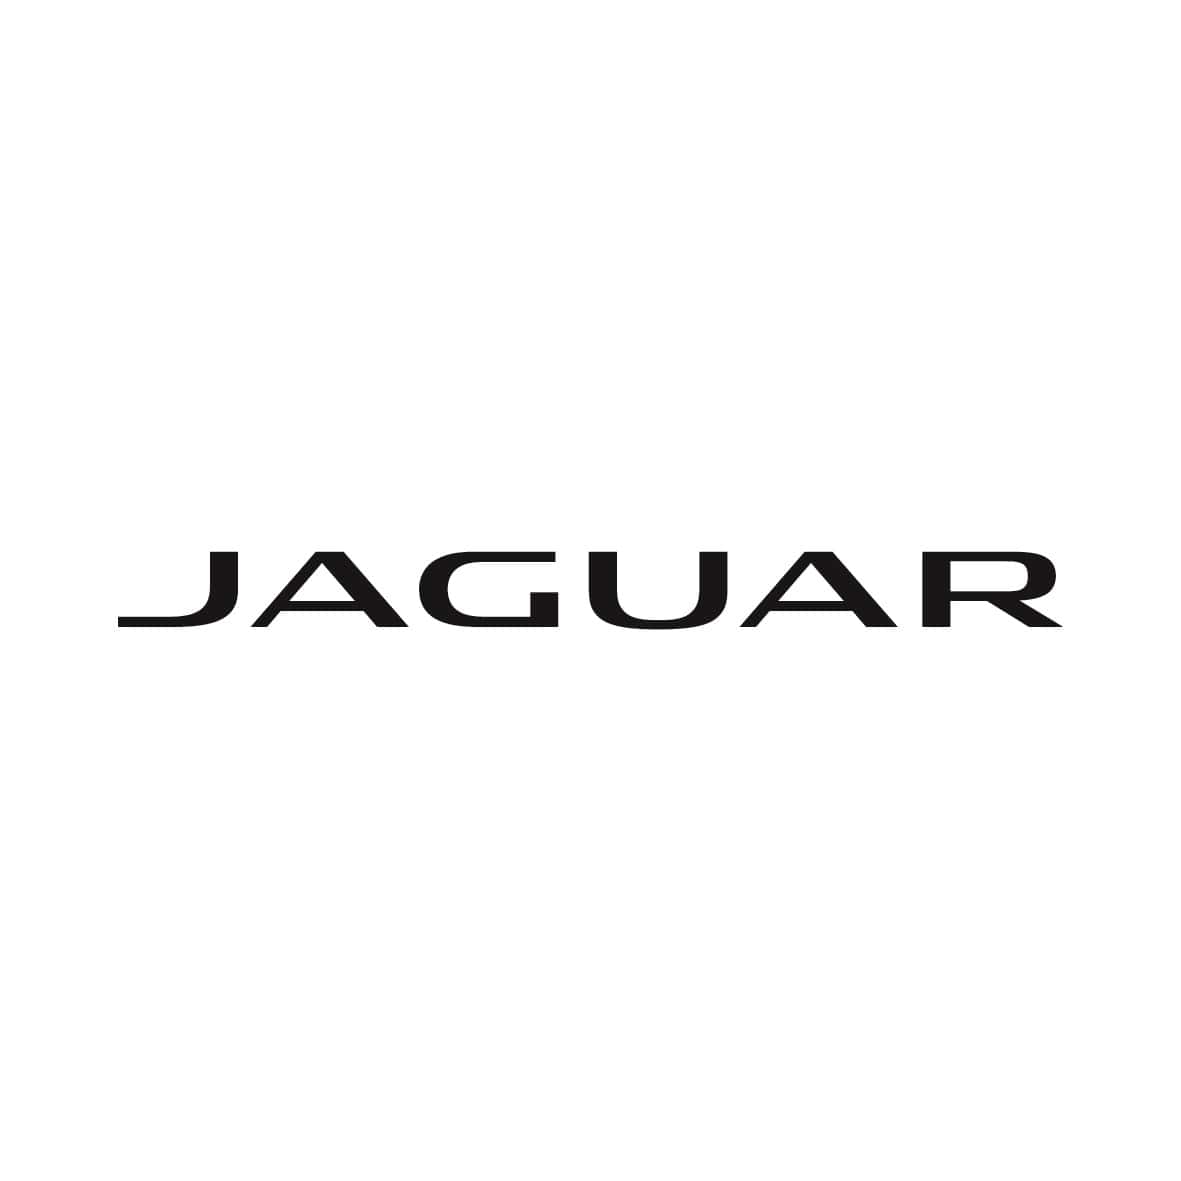 Jaguar ref 2 auto voiture stickers sticker autocollants decals sponsors sport logo tuning racing-min